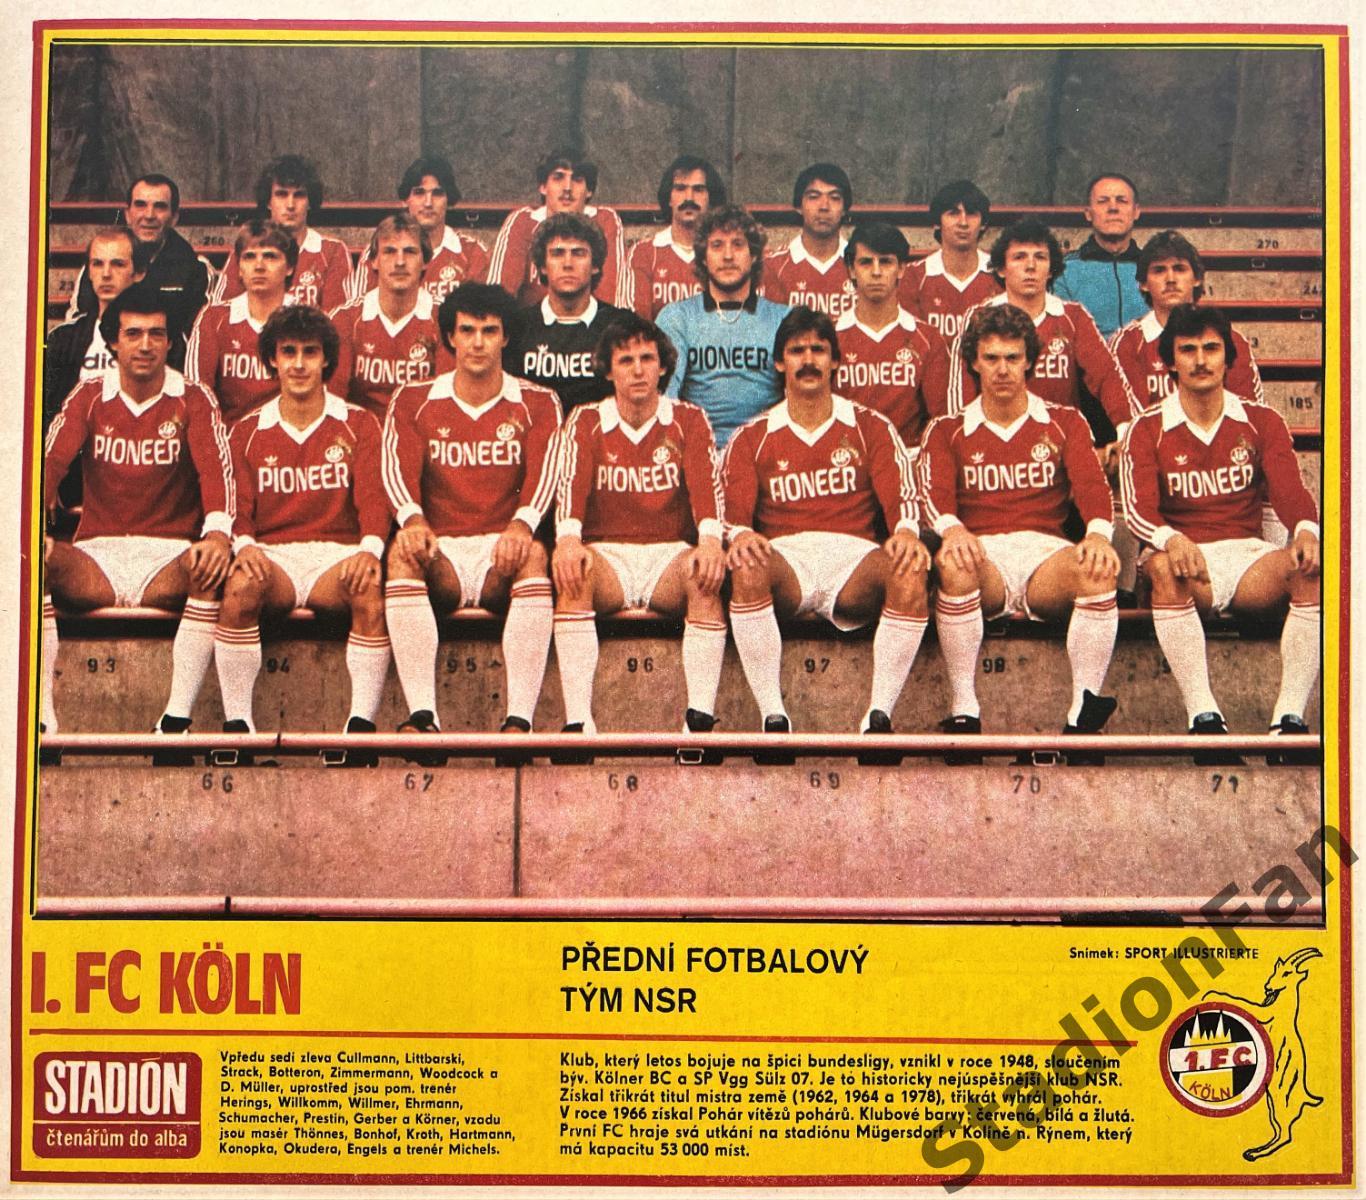 Постер из журнала Стадион (Stadion) - Koln, 1981.